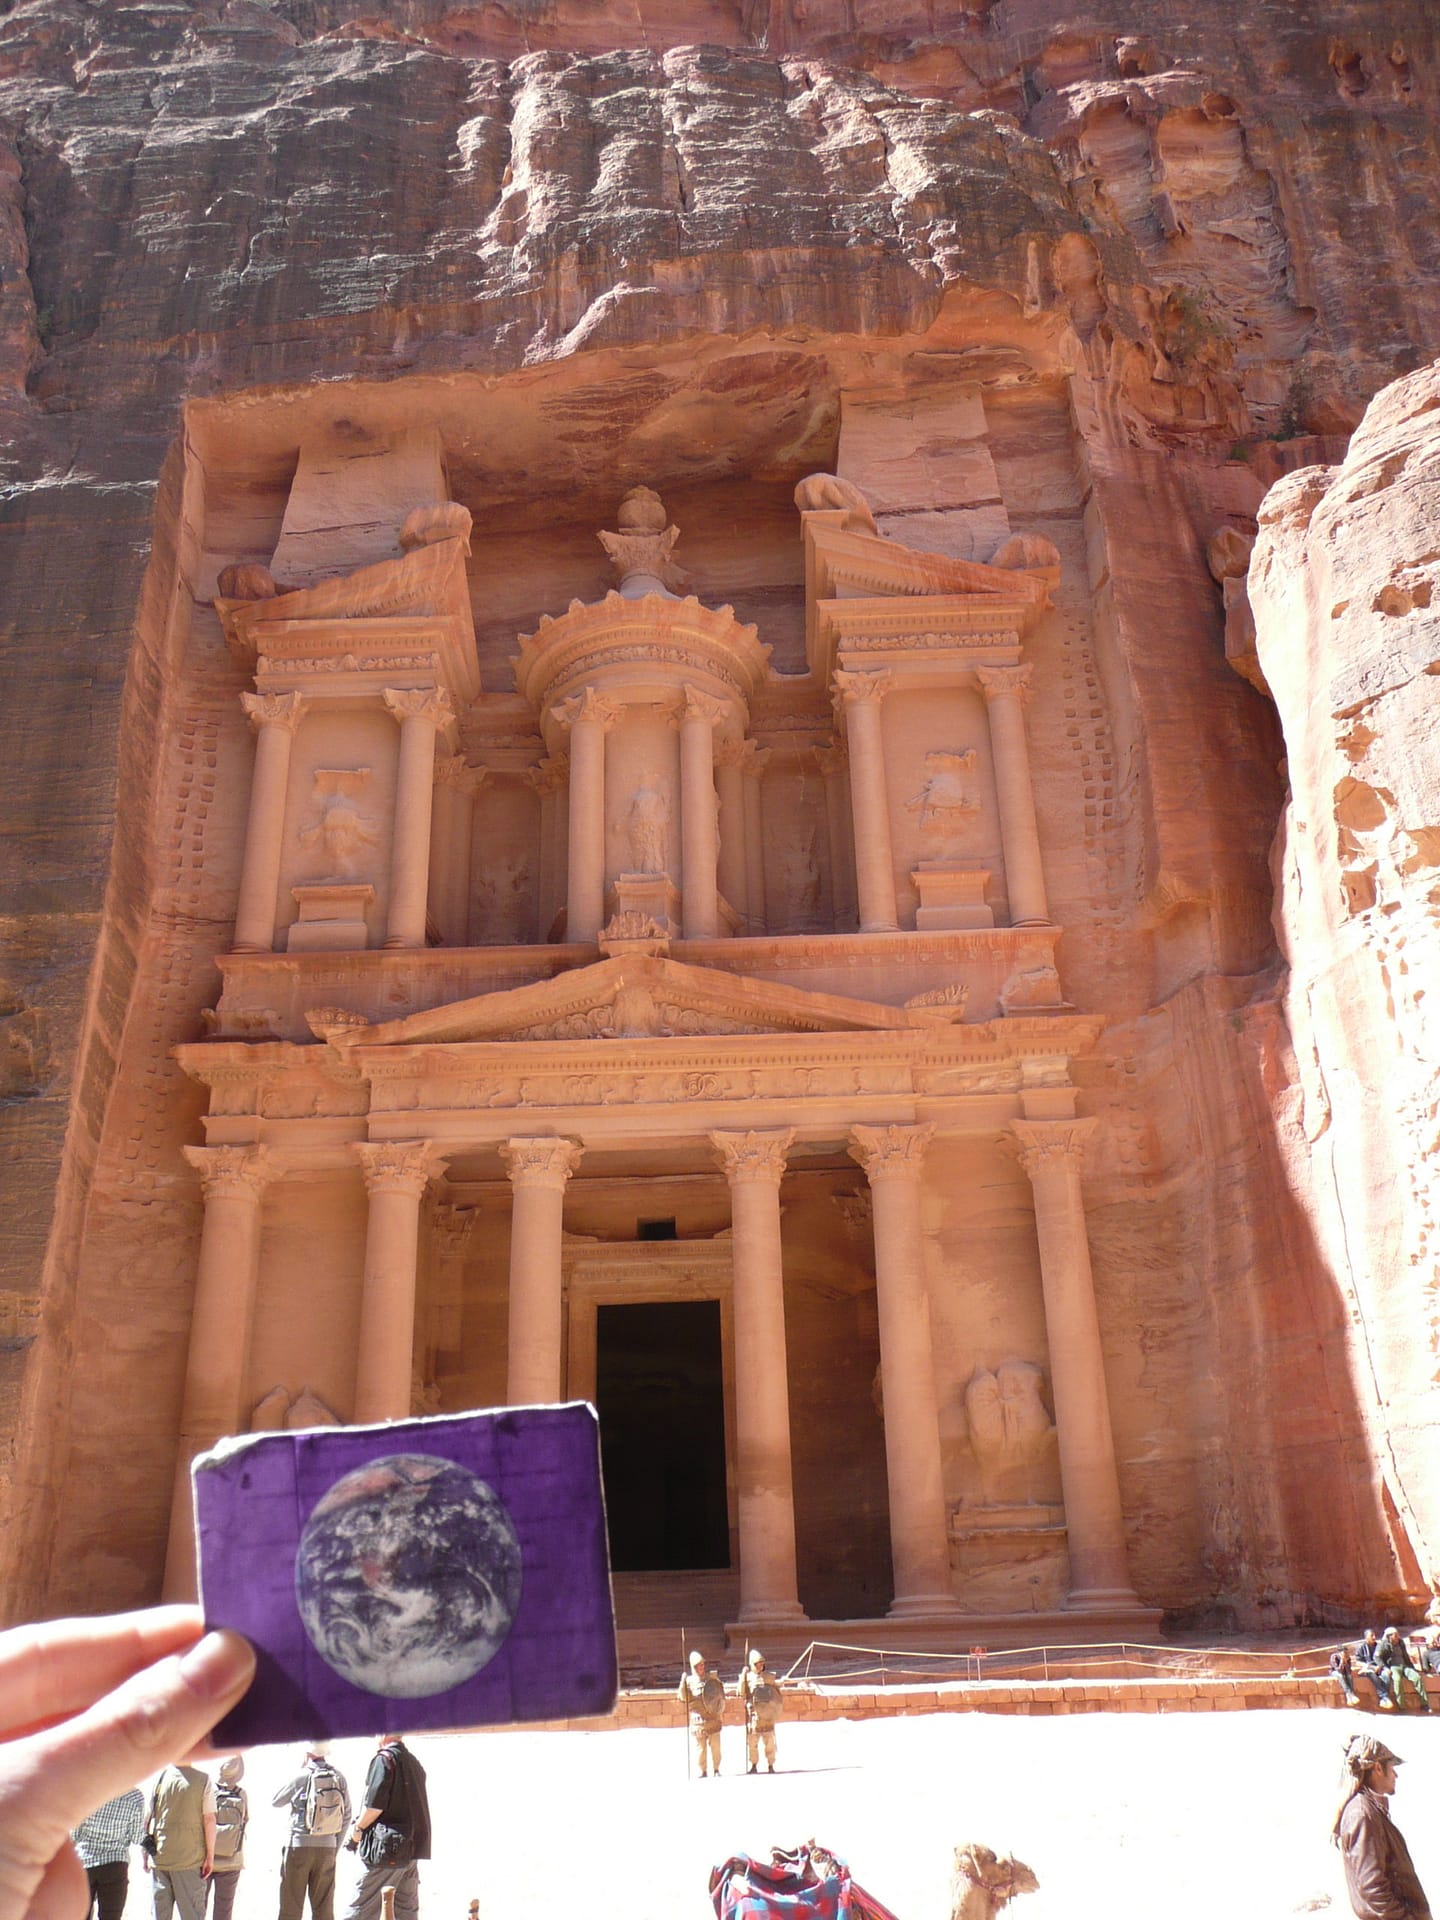 The Treasury (Al Khazeh) at Petra, Jordan was EarthFlagged!